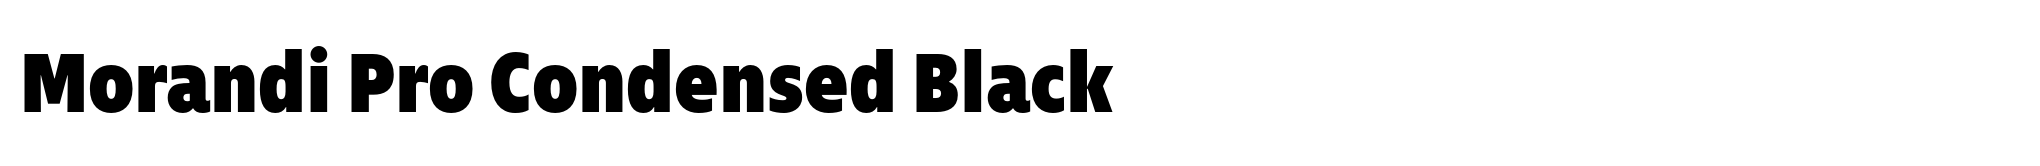 Morandi Pro Condensed Black image